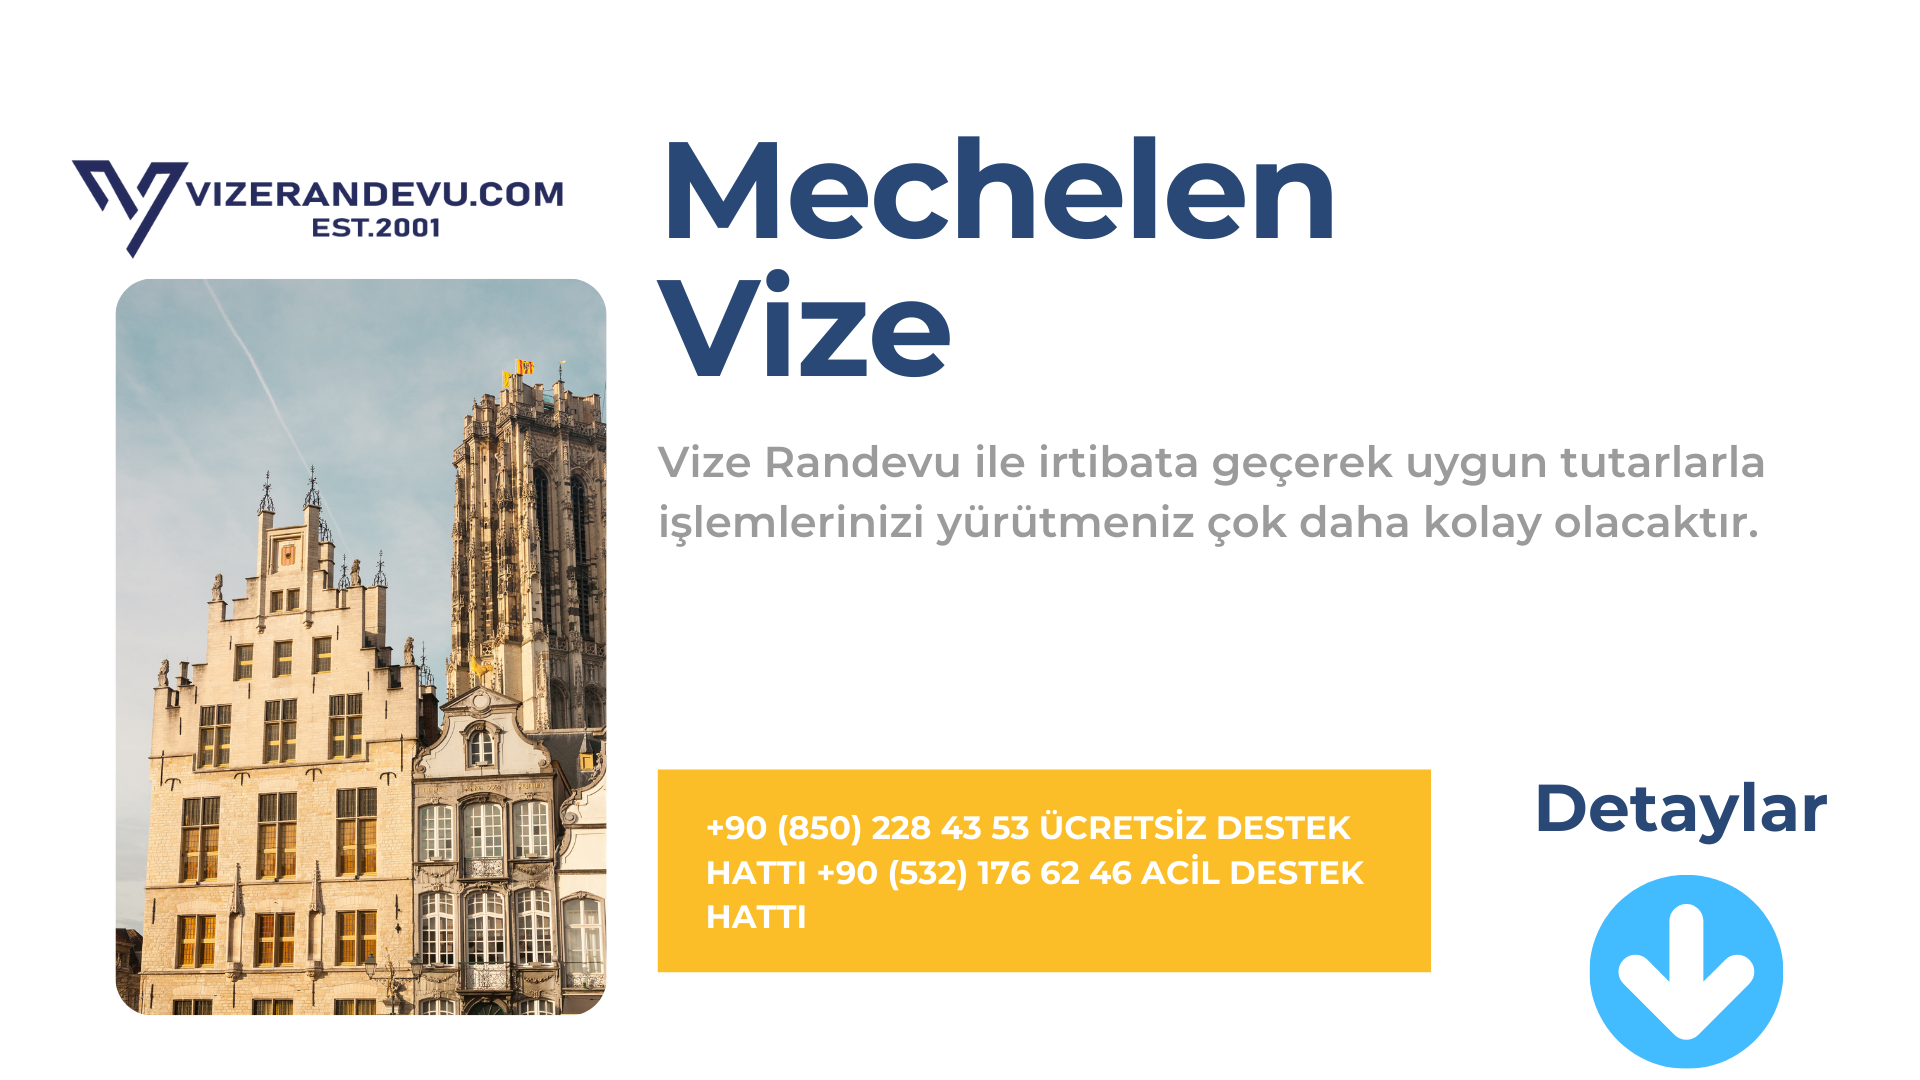 Mechelen Vize